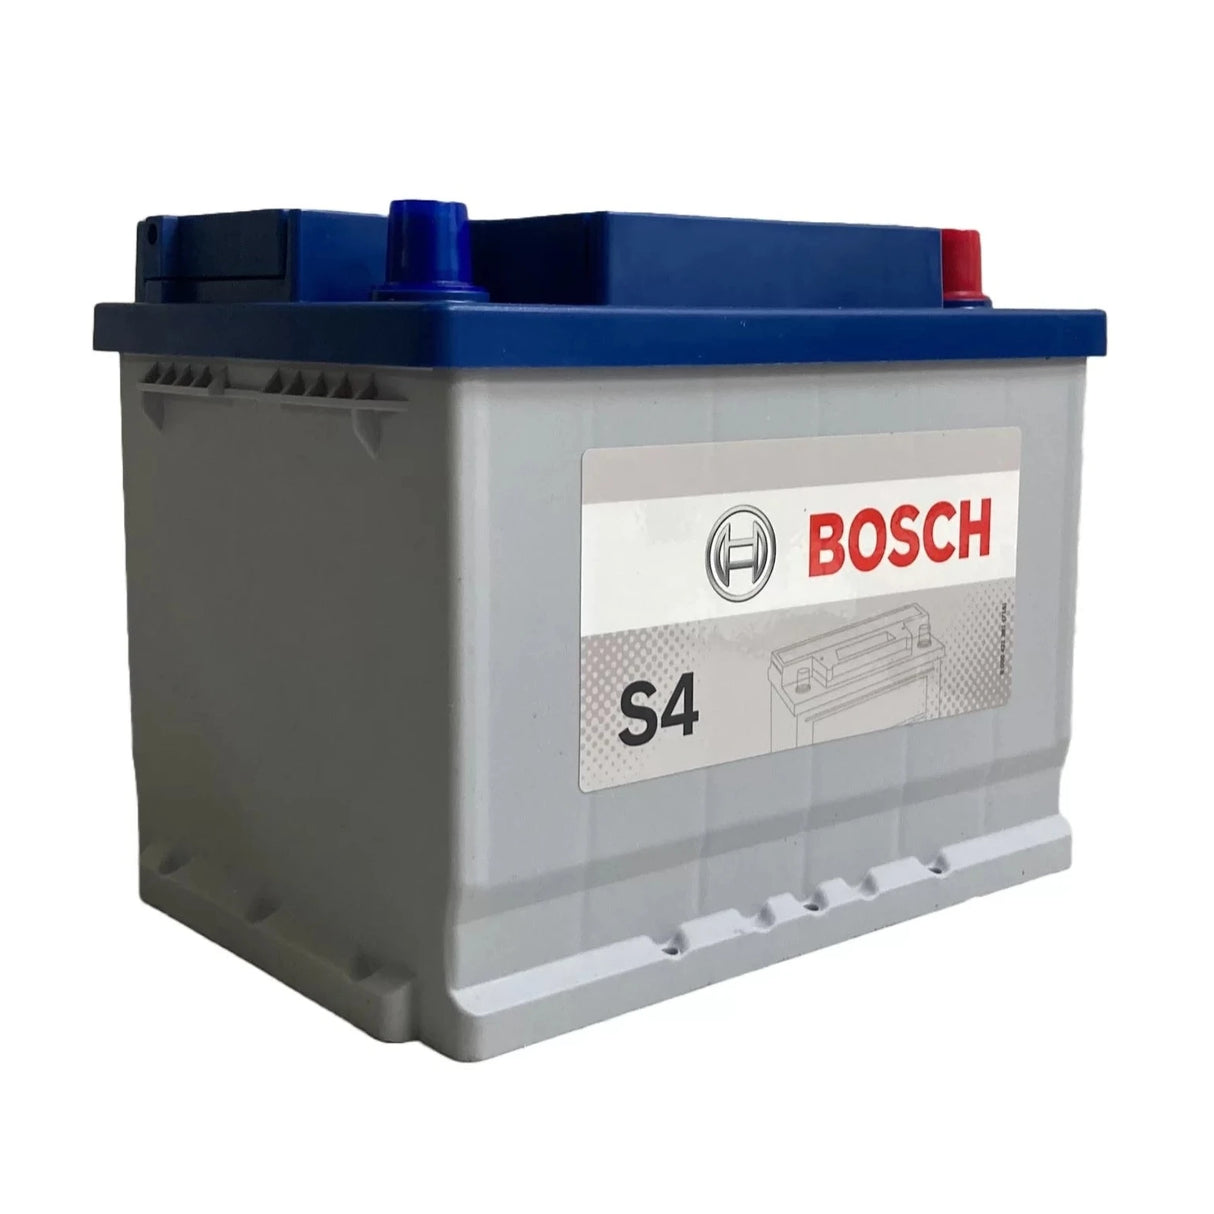 Bosch SM Mega Power Car Battery 55AH - 55559 Auto Supply Master